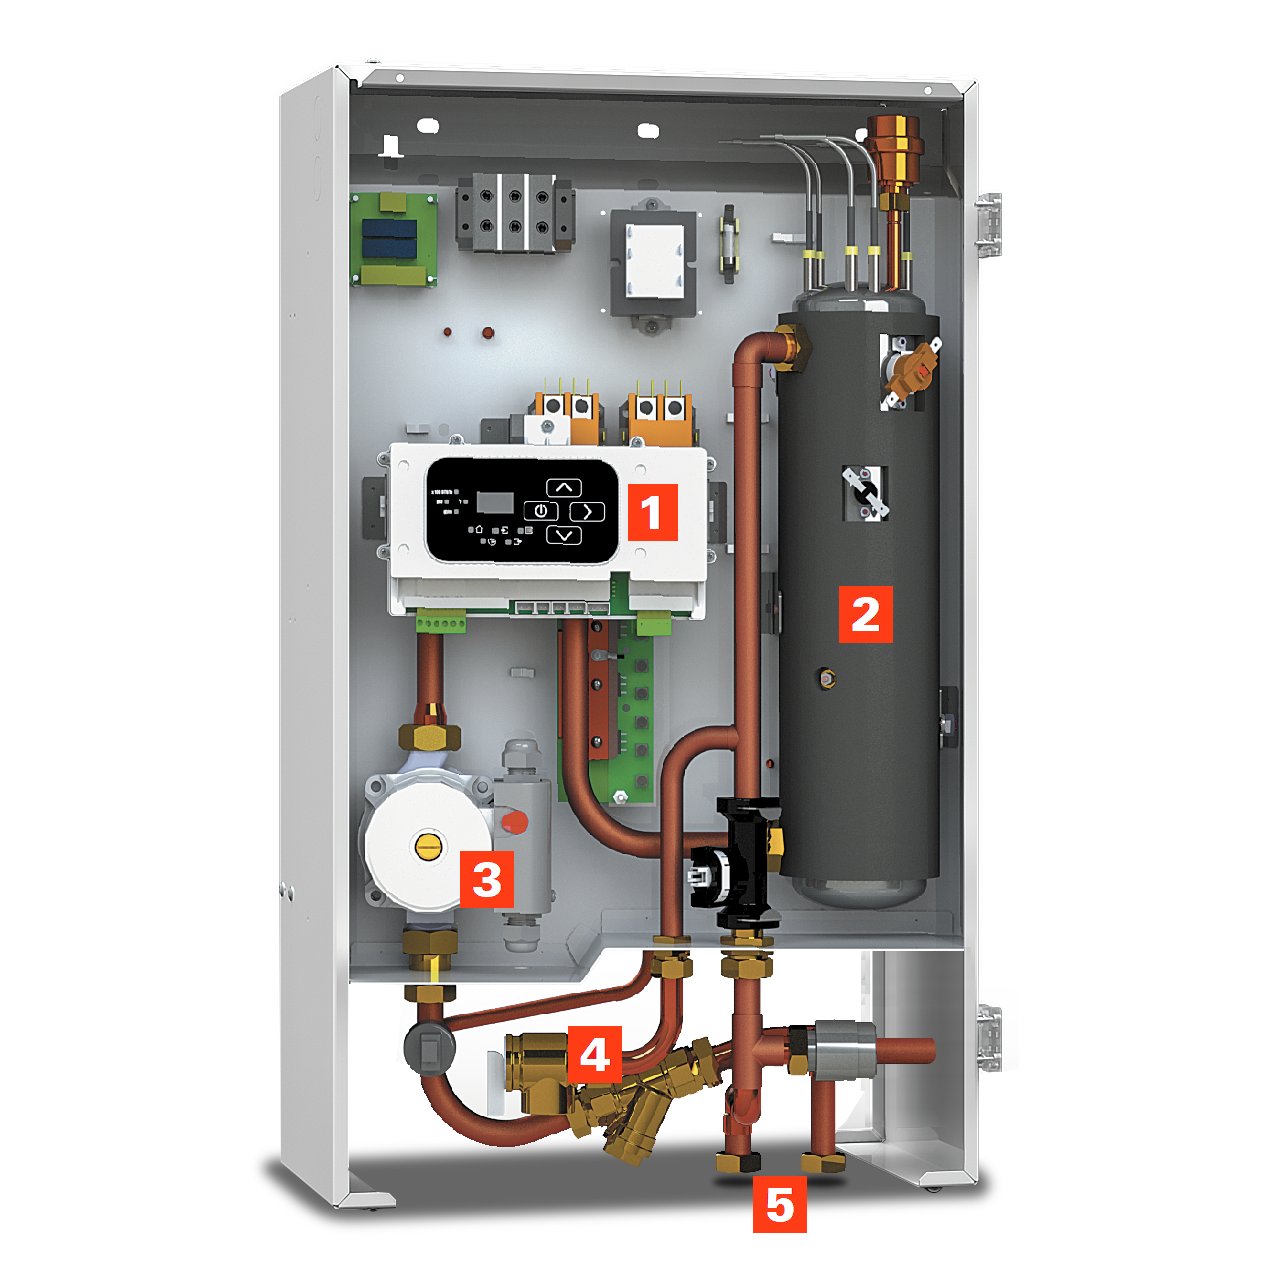 Vitotron 100 wall-mounted electric boiler